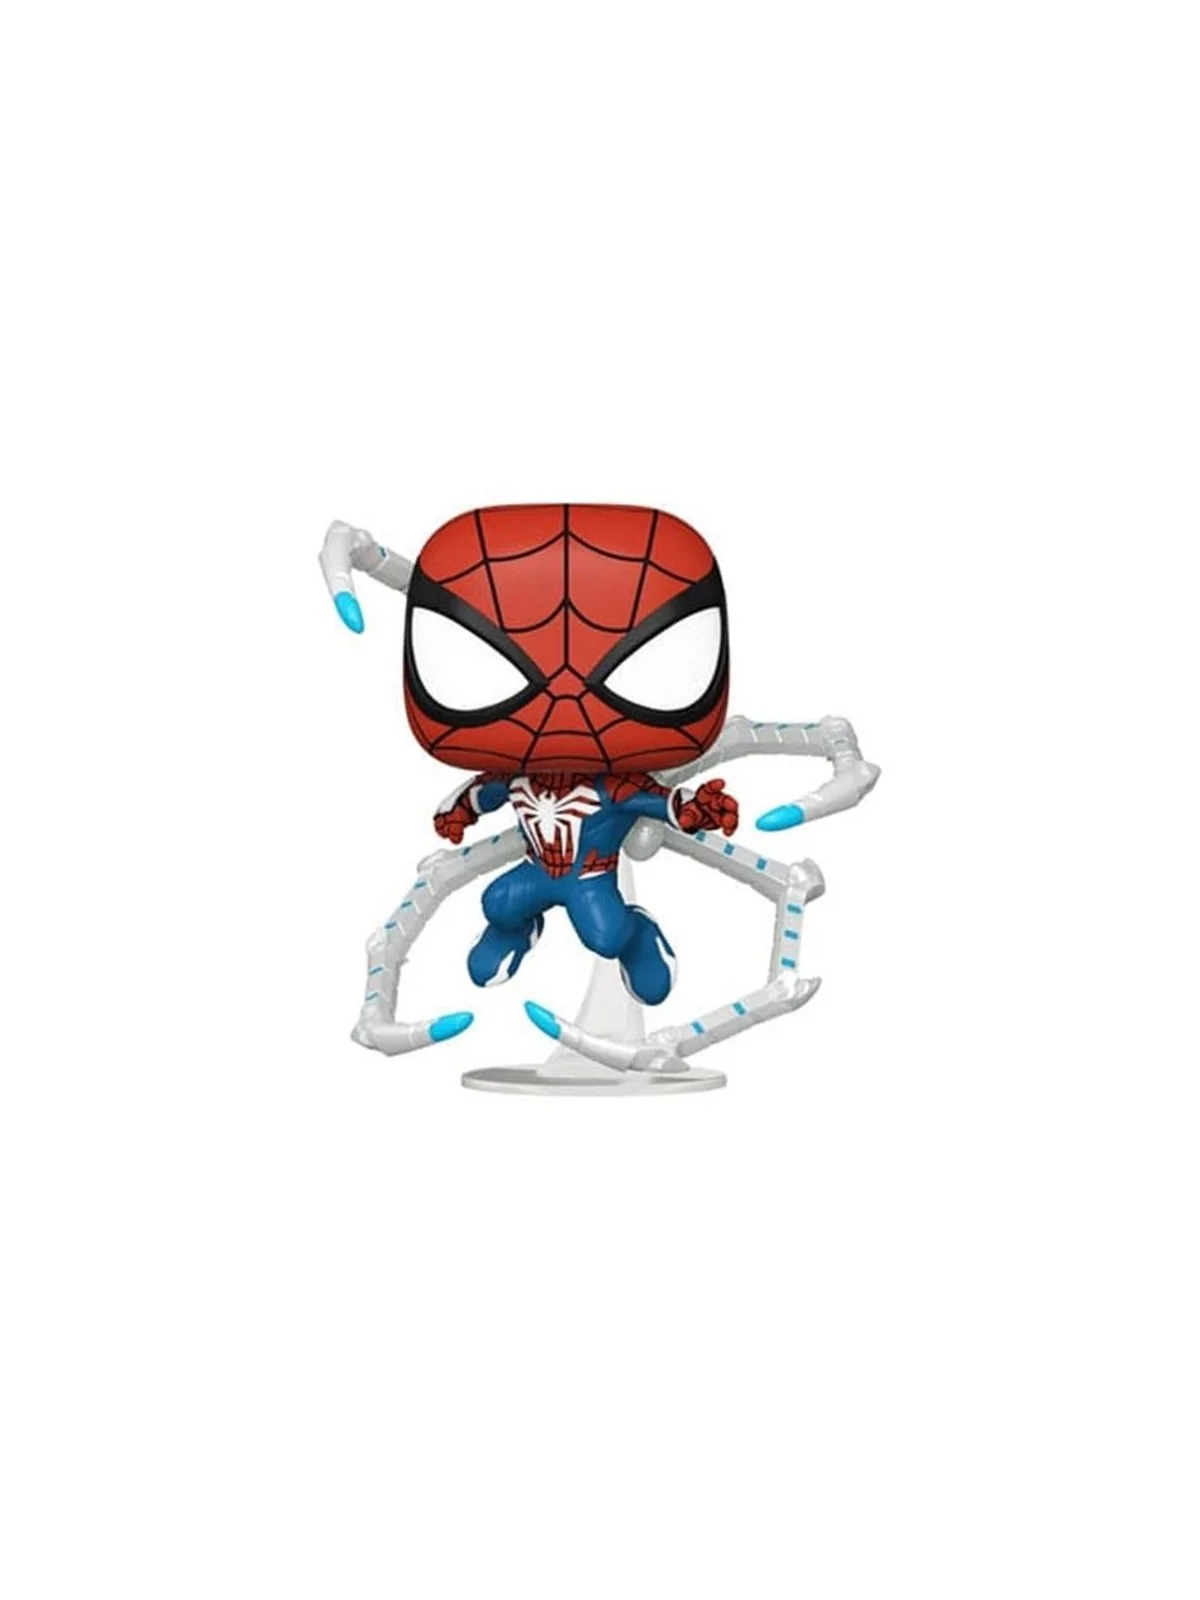 Comprar Funko POP! Marvel: Spiderman 2 - Peter Paker Advanced Suit 2.0